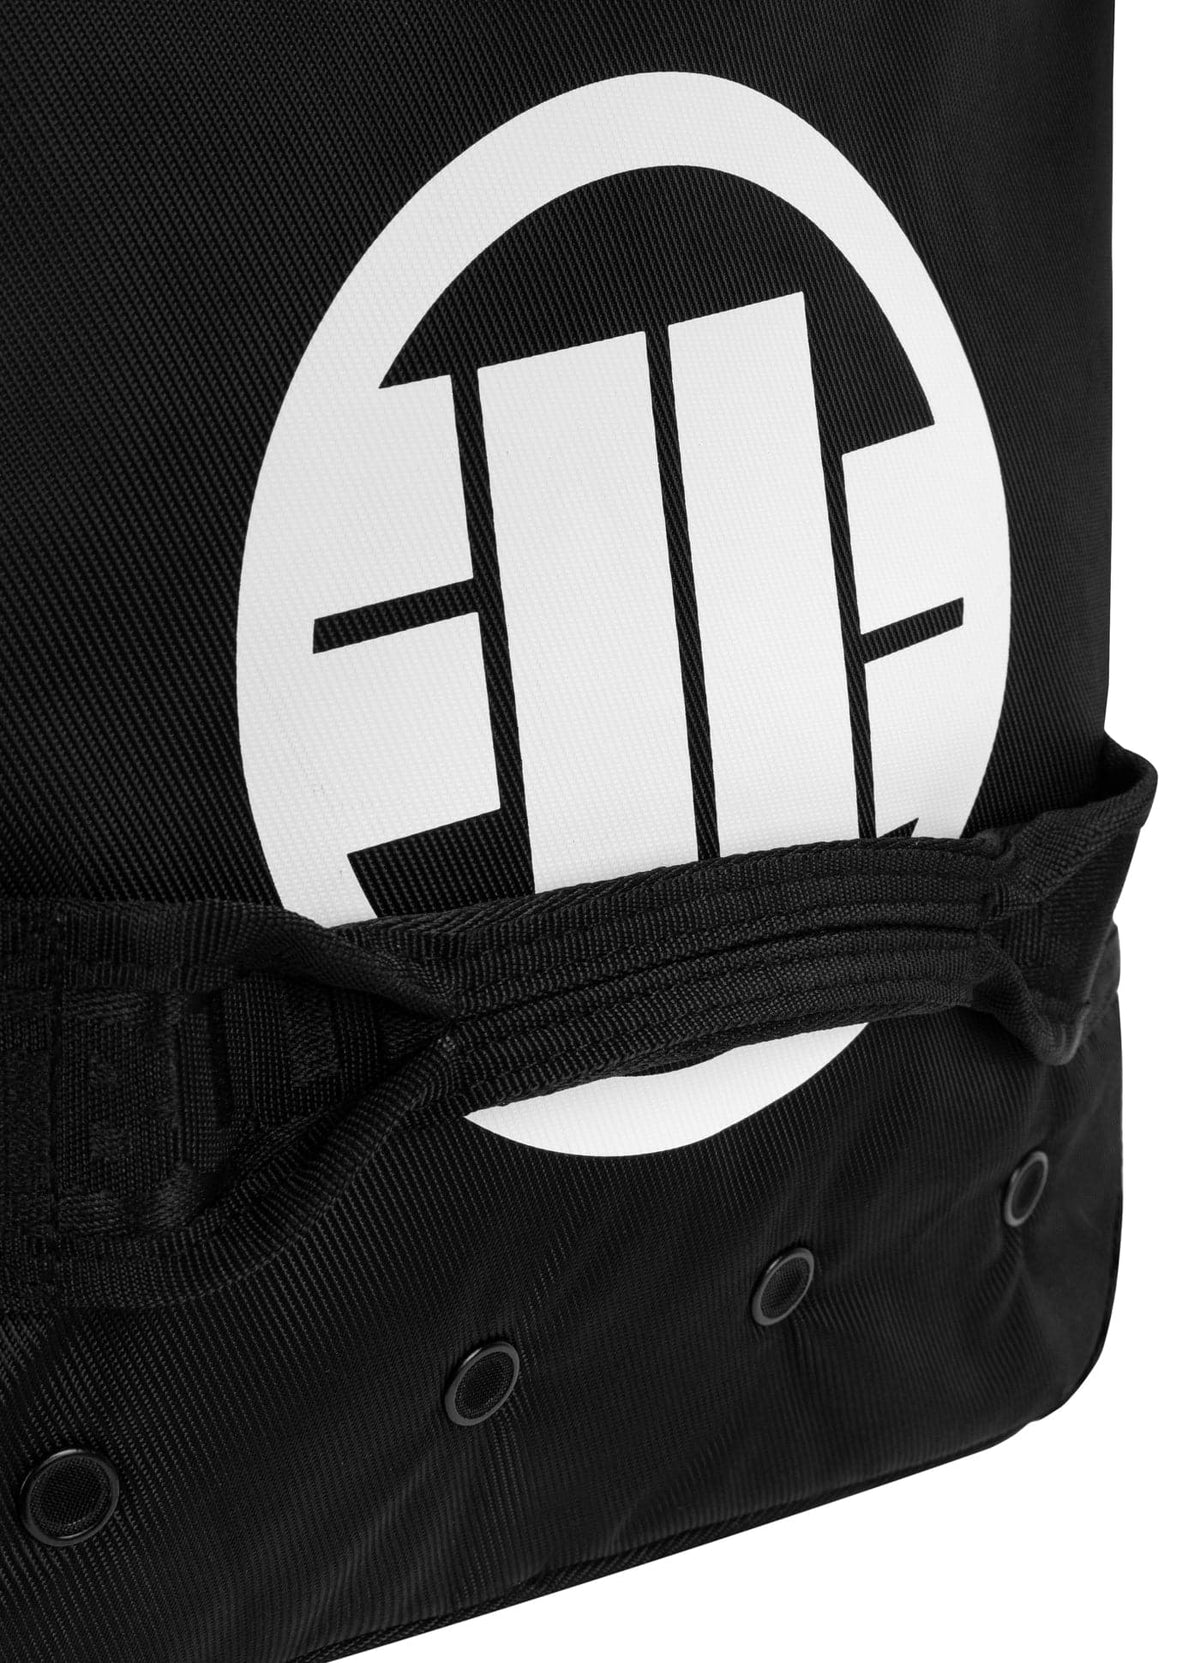 FIGHT HILLTOP Black Duffle Bag